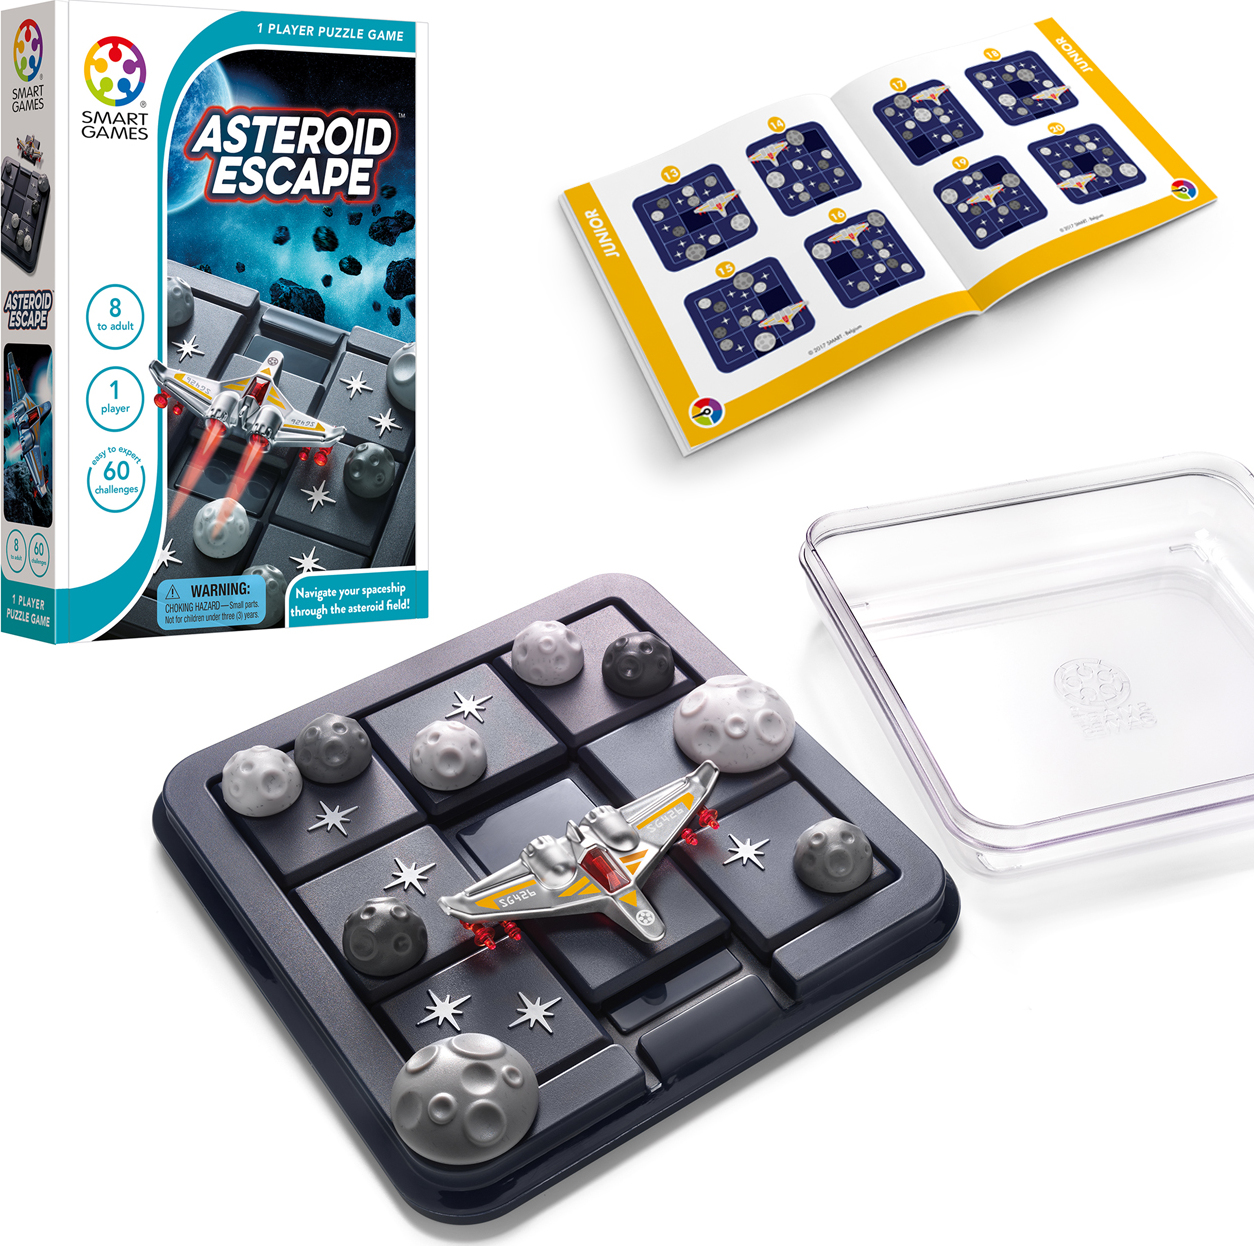 SG426 Compact Puzzle Game Smart Games Asteroid Escape 